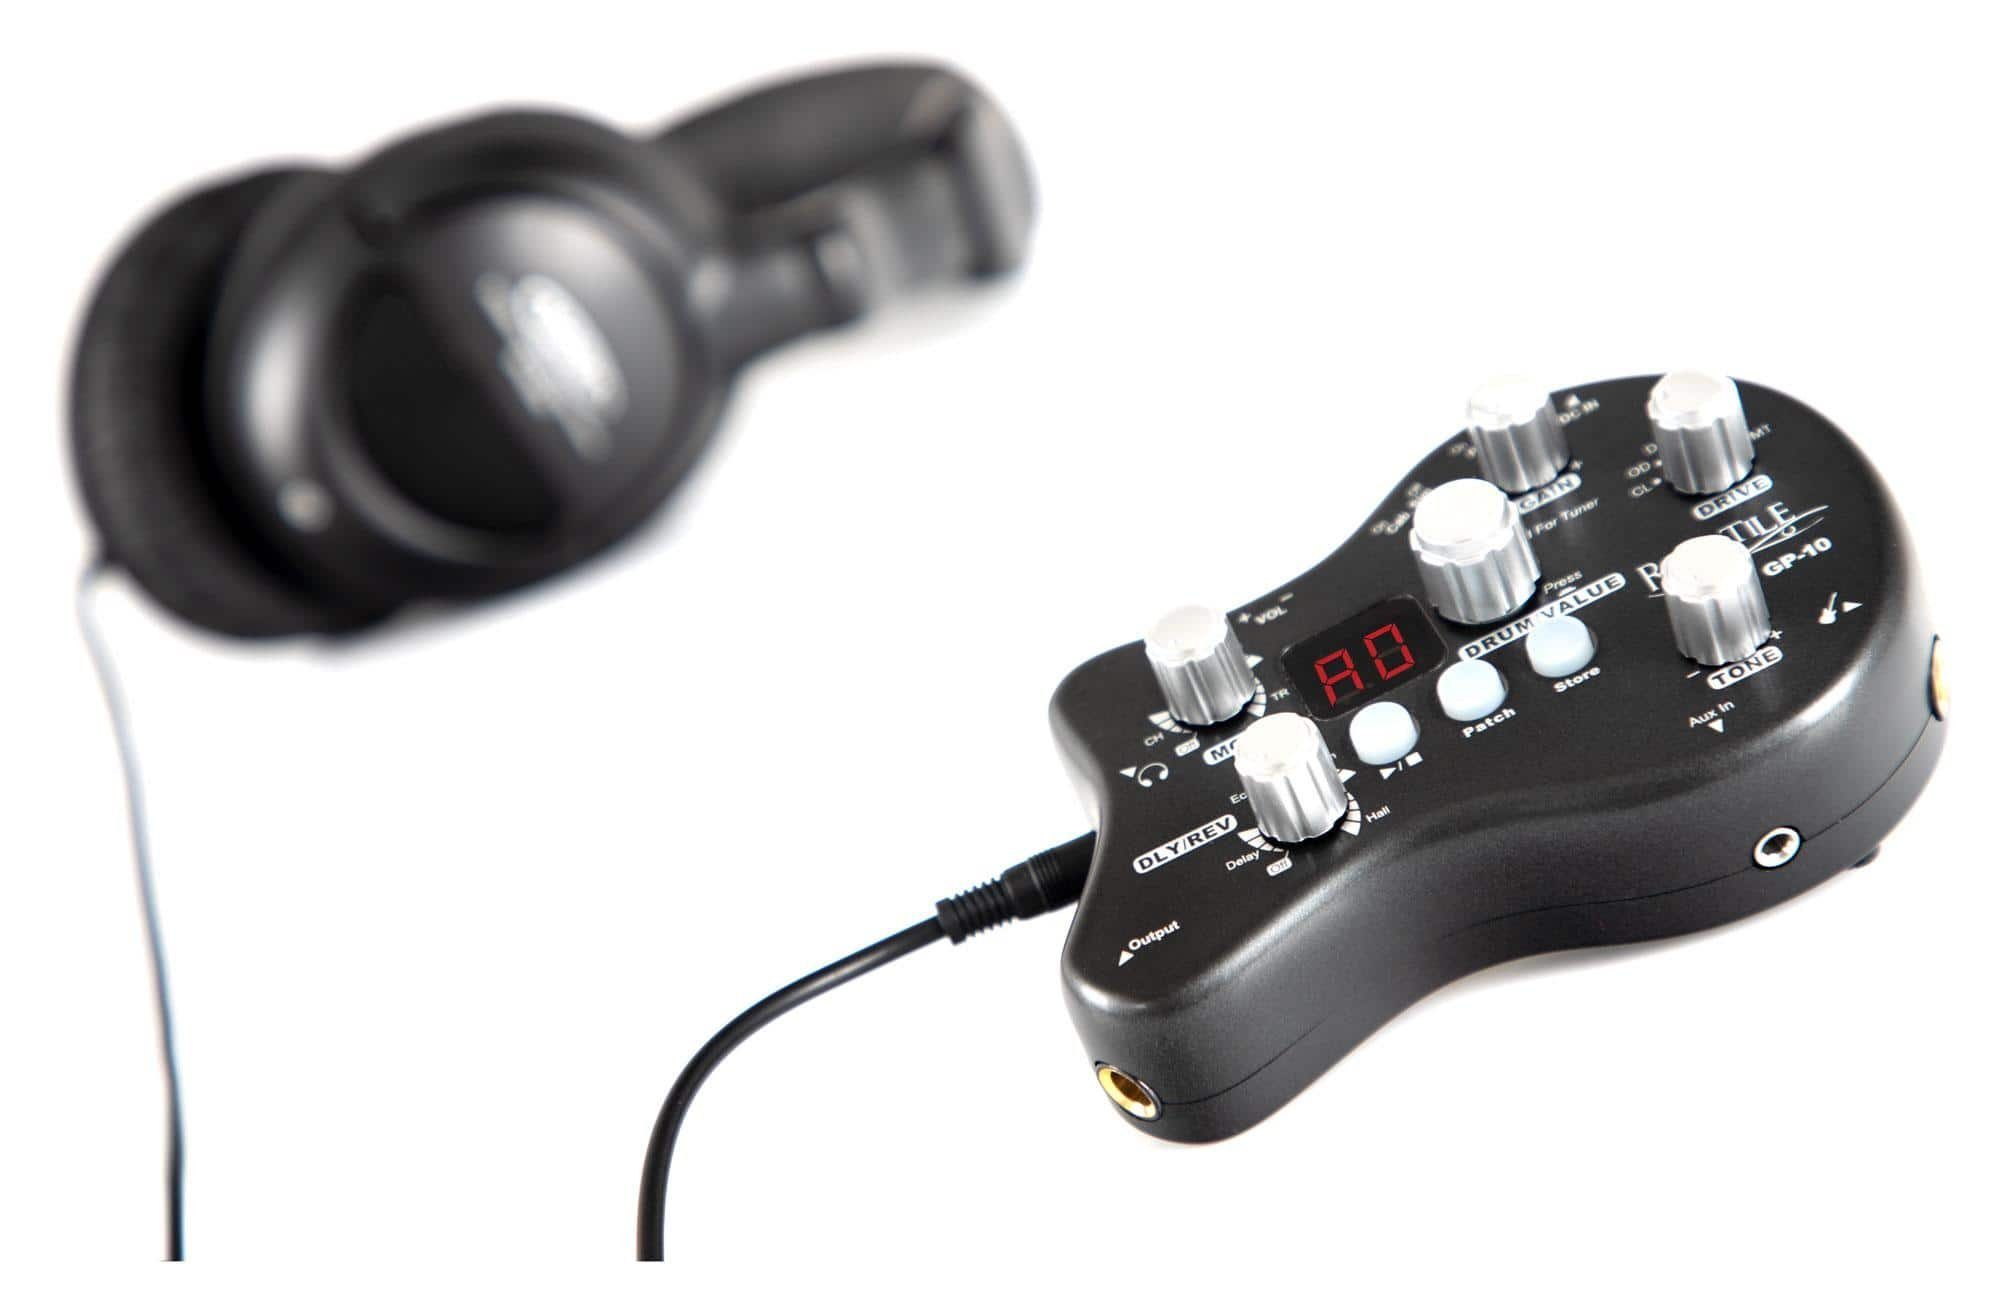 Kopfhörerverstärker Kopfhörer-Verstärker & mit Rhythmen) Kit Player und (tragbarer Practice (8-Effekttypen GP-10 Drum-Loop 40 Multieffektgerät) Rocktile